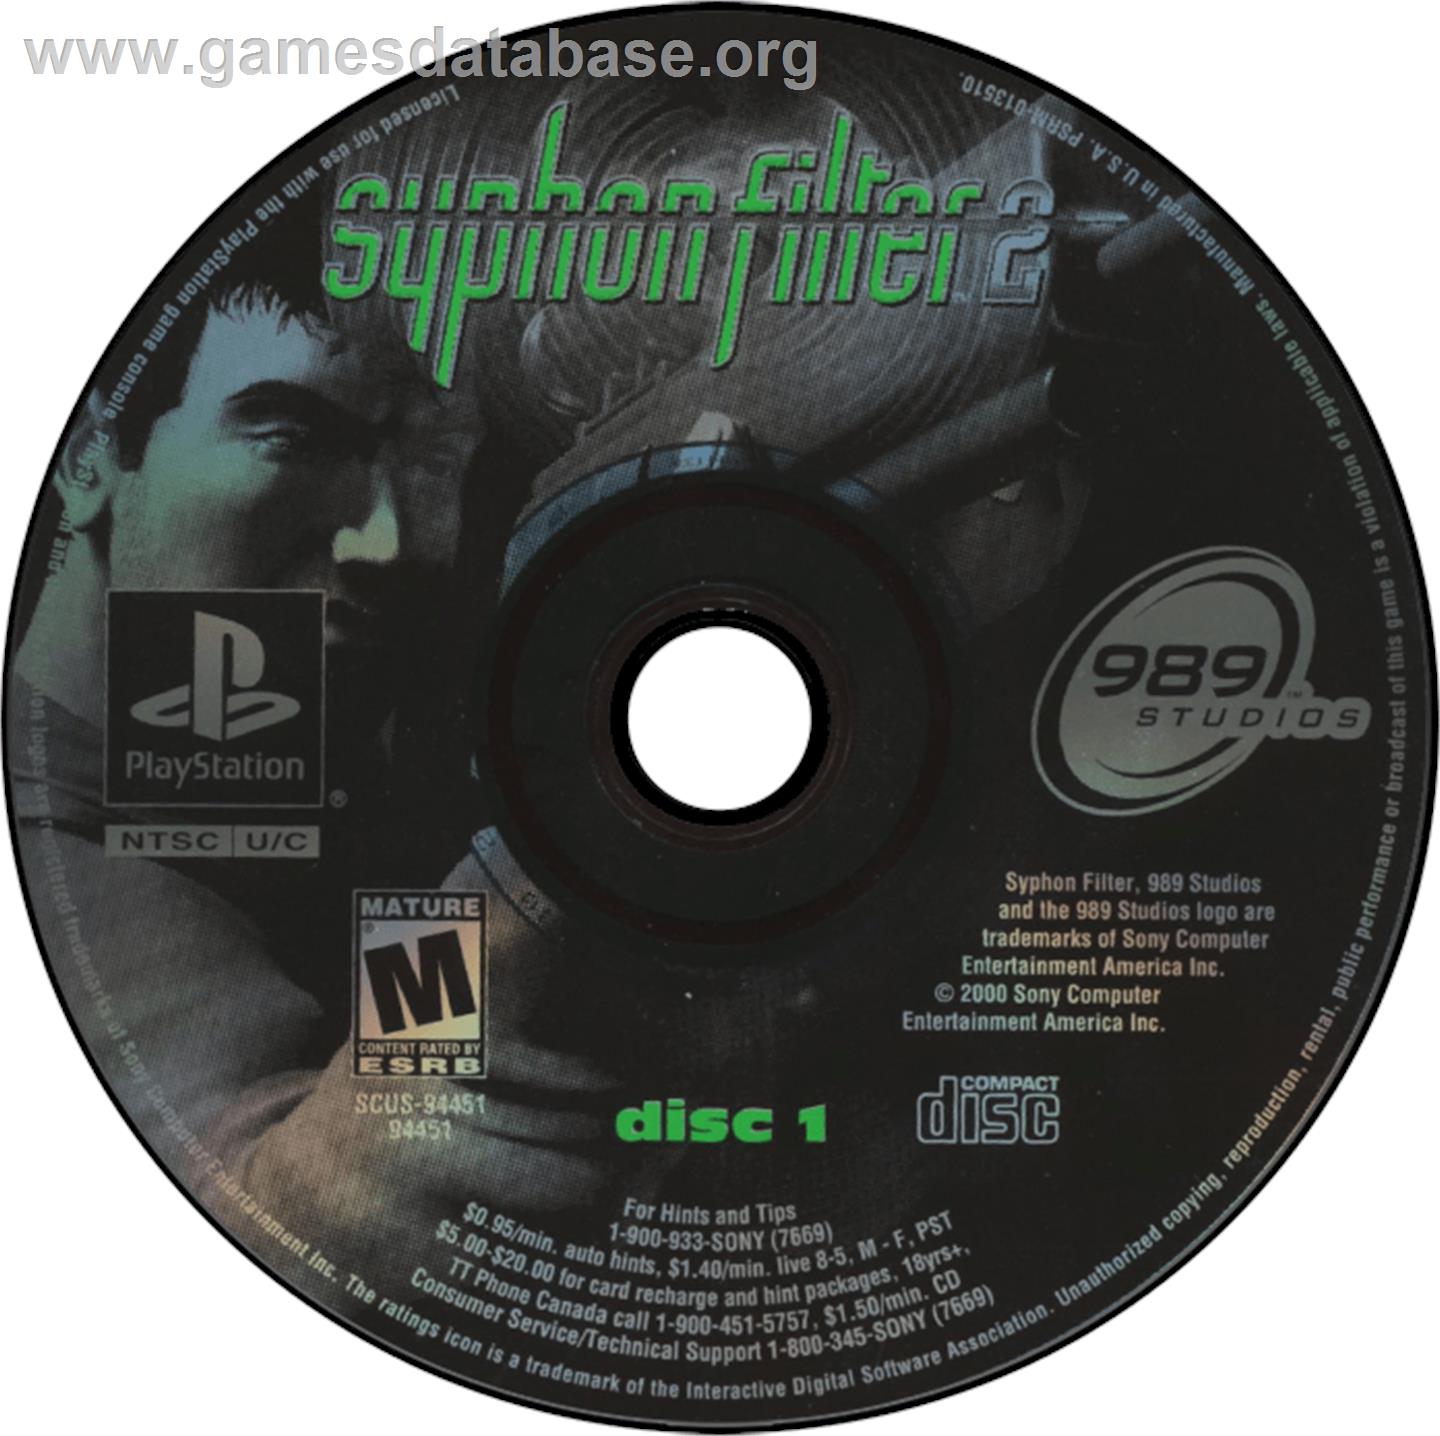 Syphon Filter 2 - Sony Playstation - Artwork - Disc